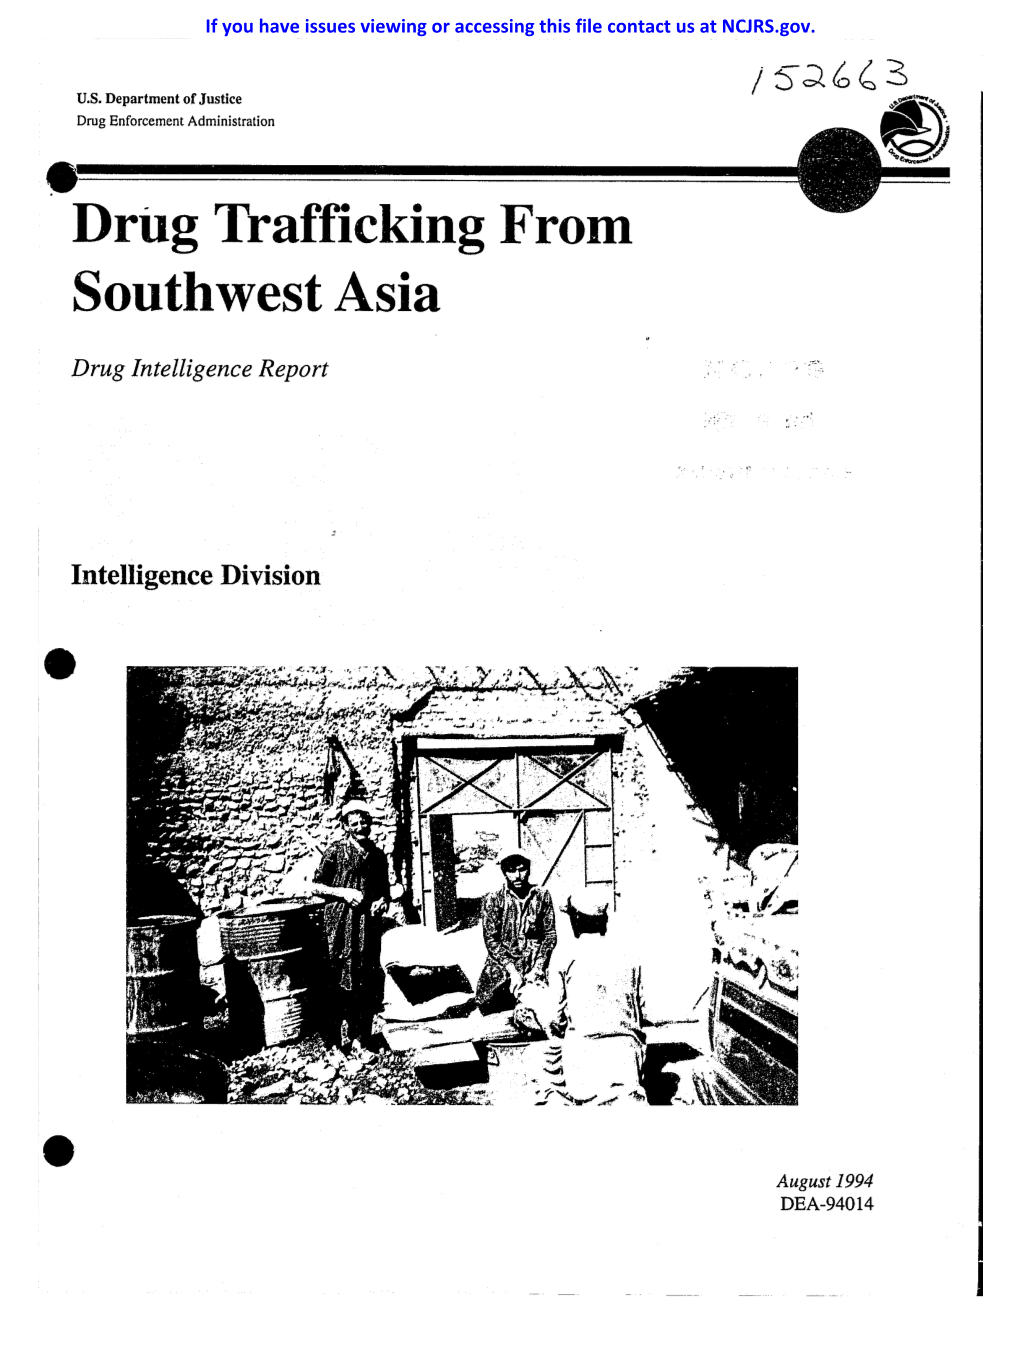 Drug Trafficking from Southwest Asia